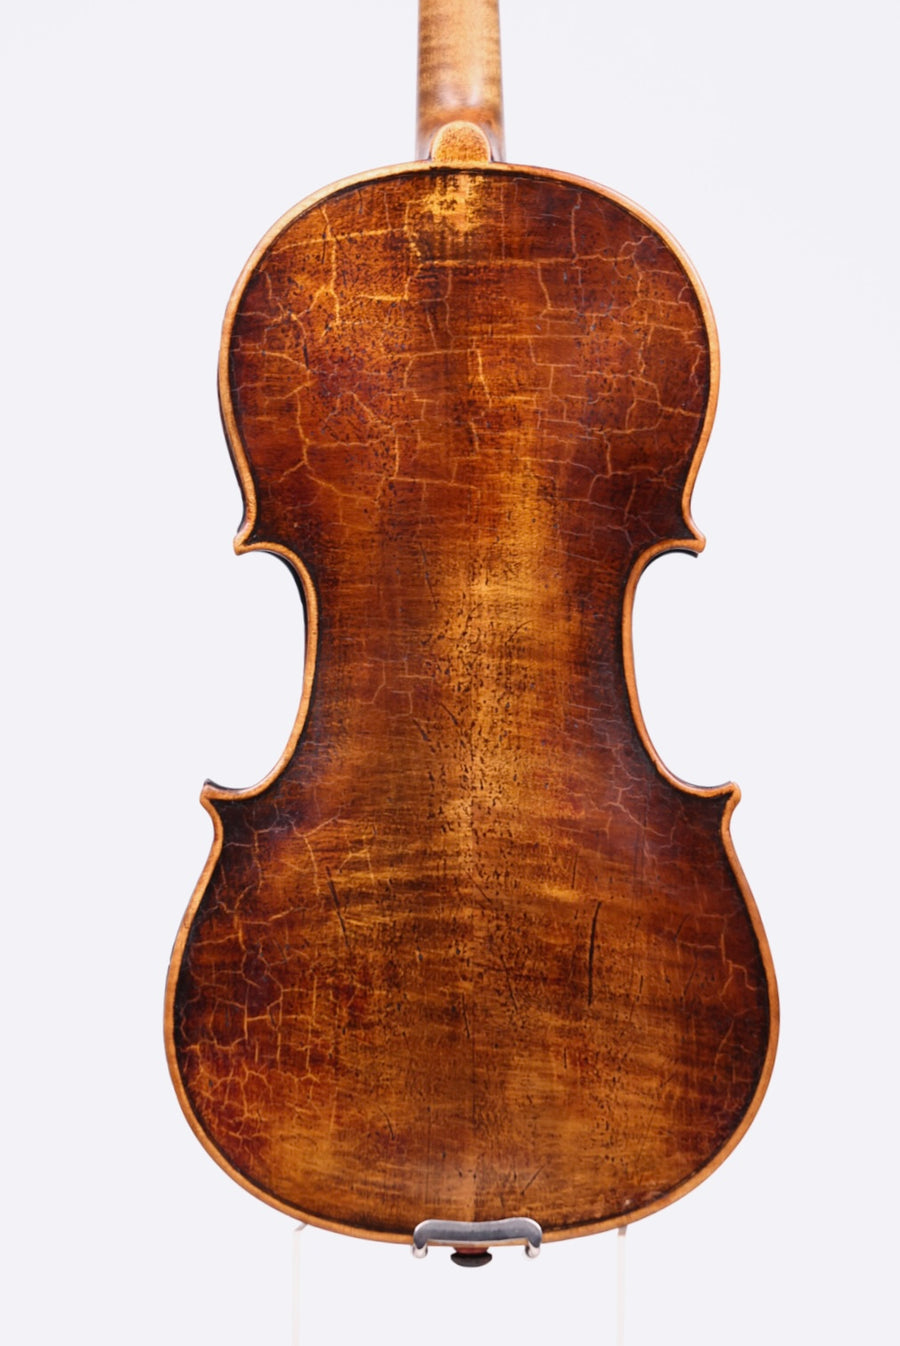 A Good German Violin From Klingenthal, Circa 1870-1880.